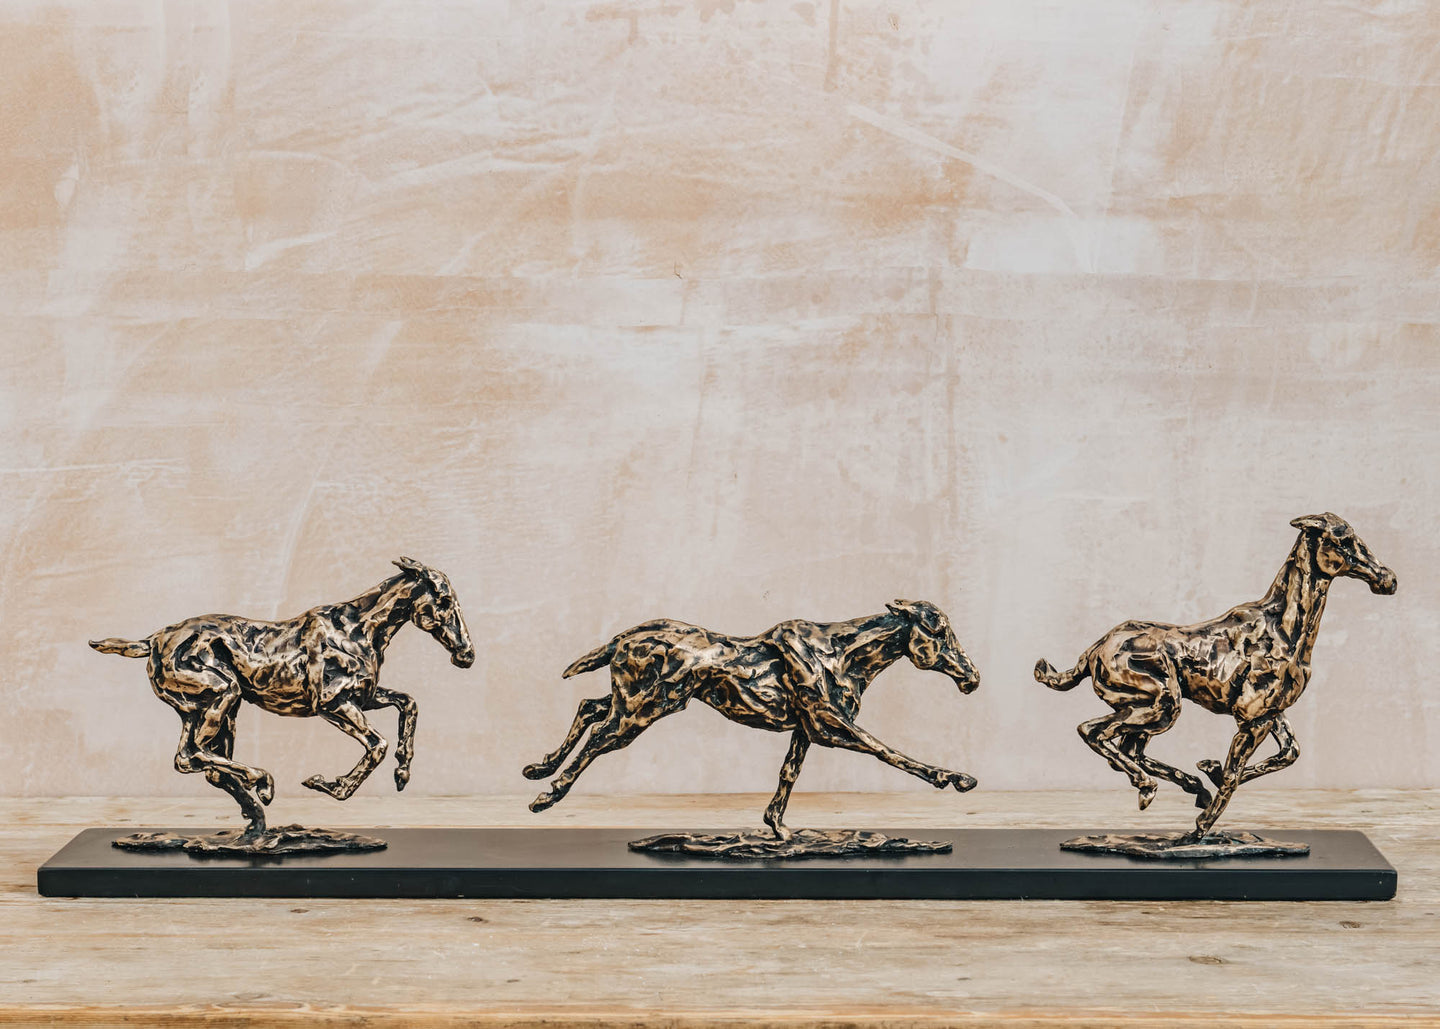 Galloping Horse Series I, II, III by Jane Shaw